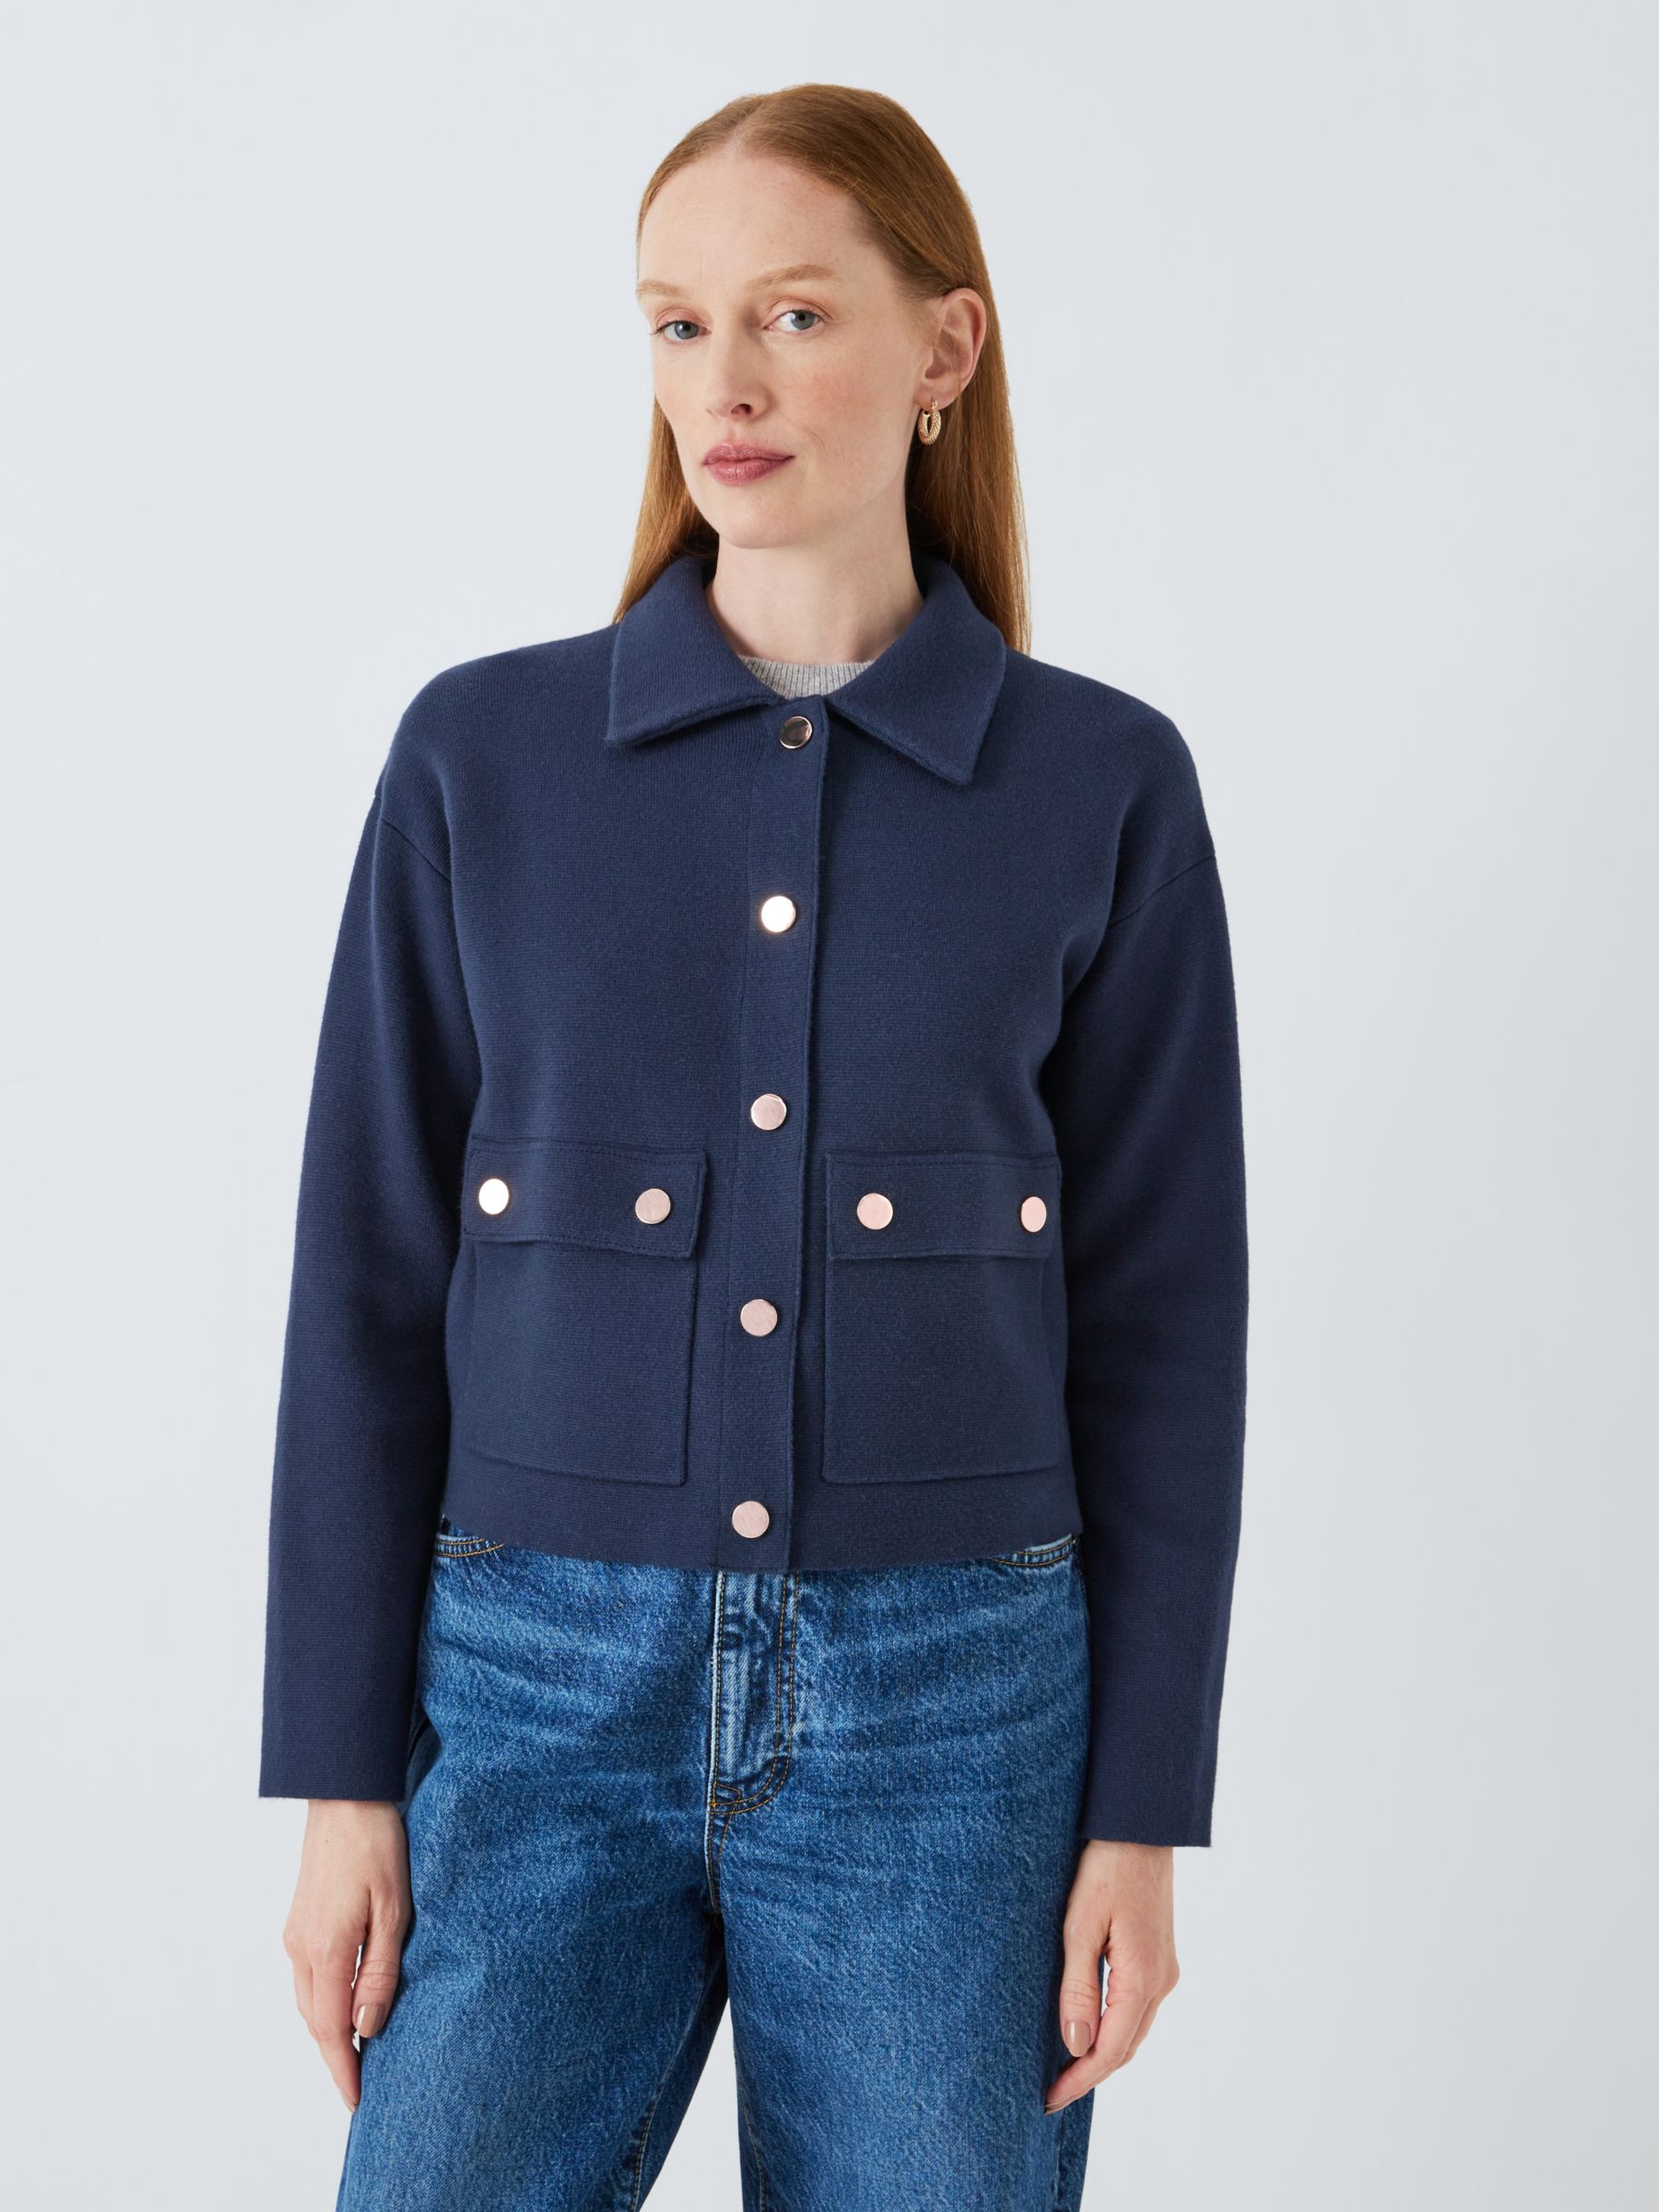 Mossimo Womens Winter Coat - UK 14 - Blue 17 Vintage Clothing